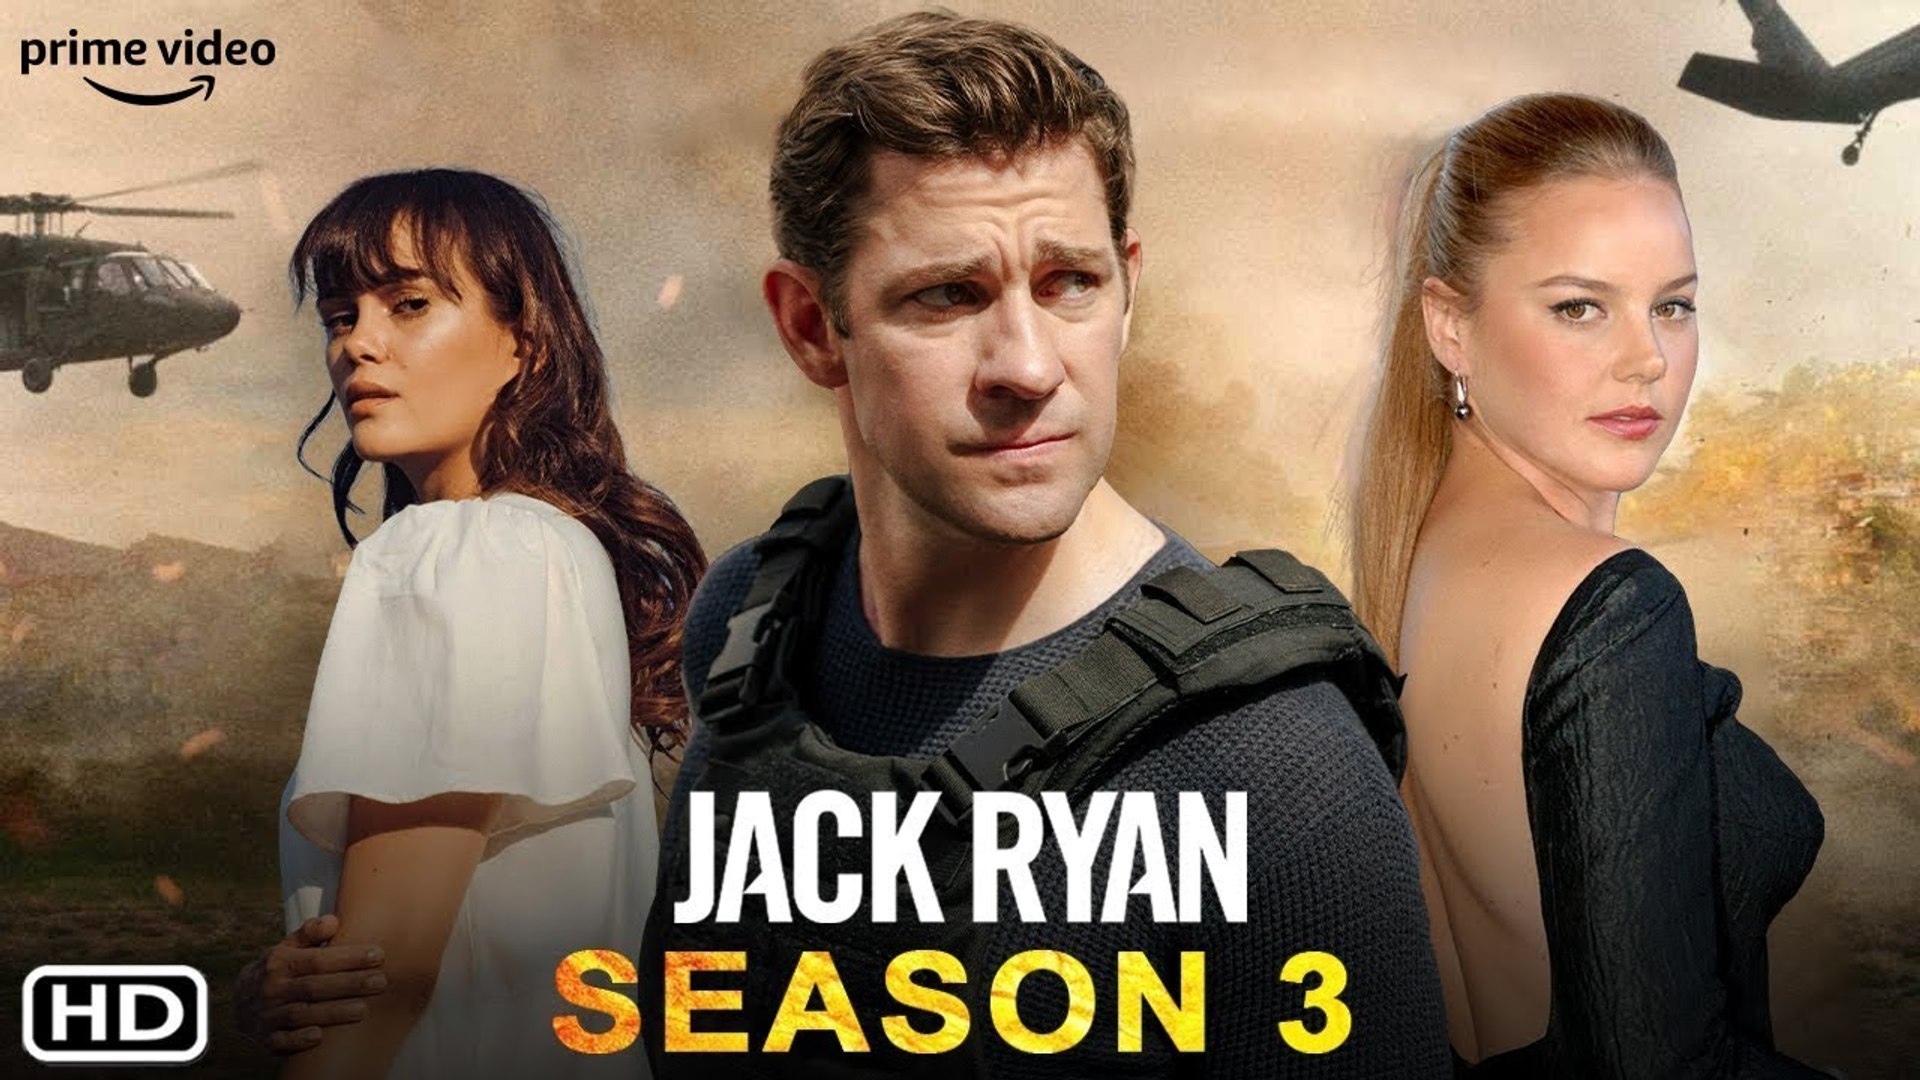 Jack Ryan Season 3 Trailer Amazon Prime, Tom Clancy's - video Dailymotion